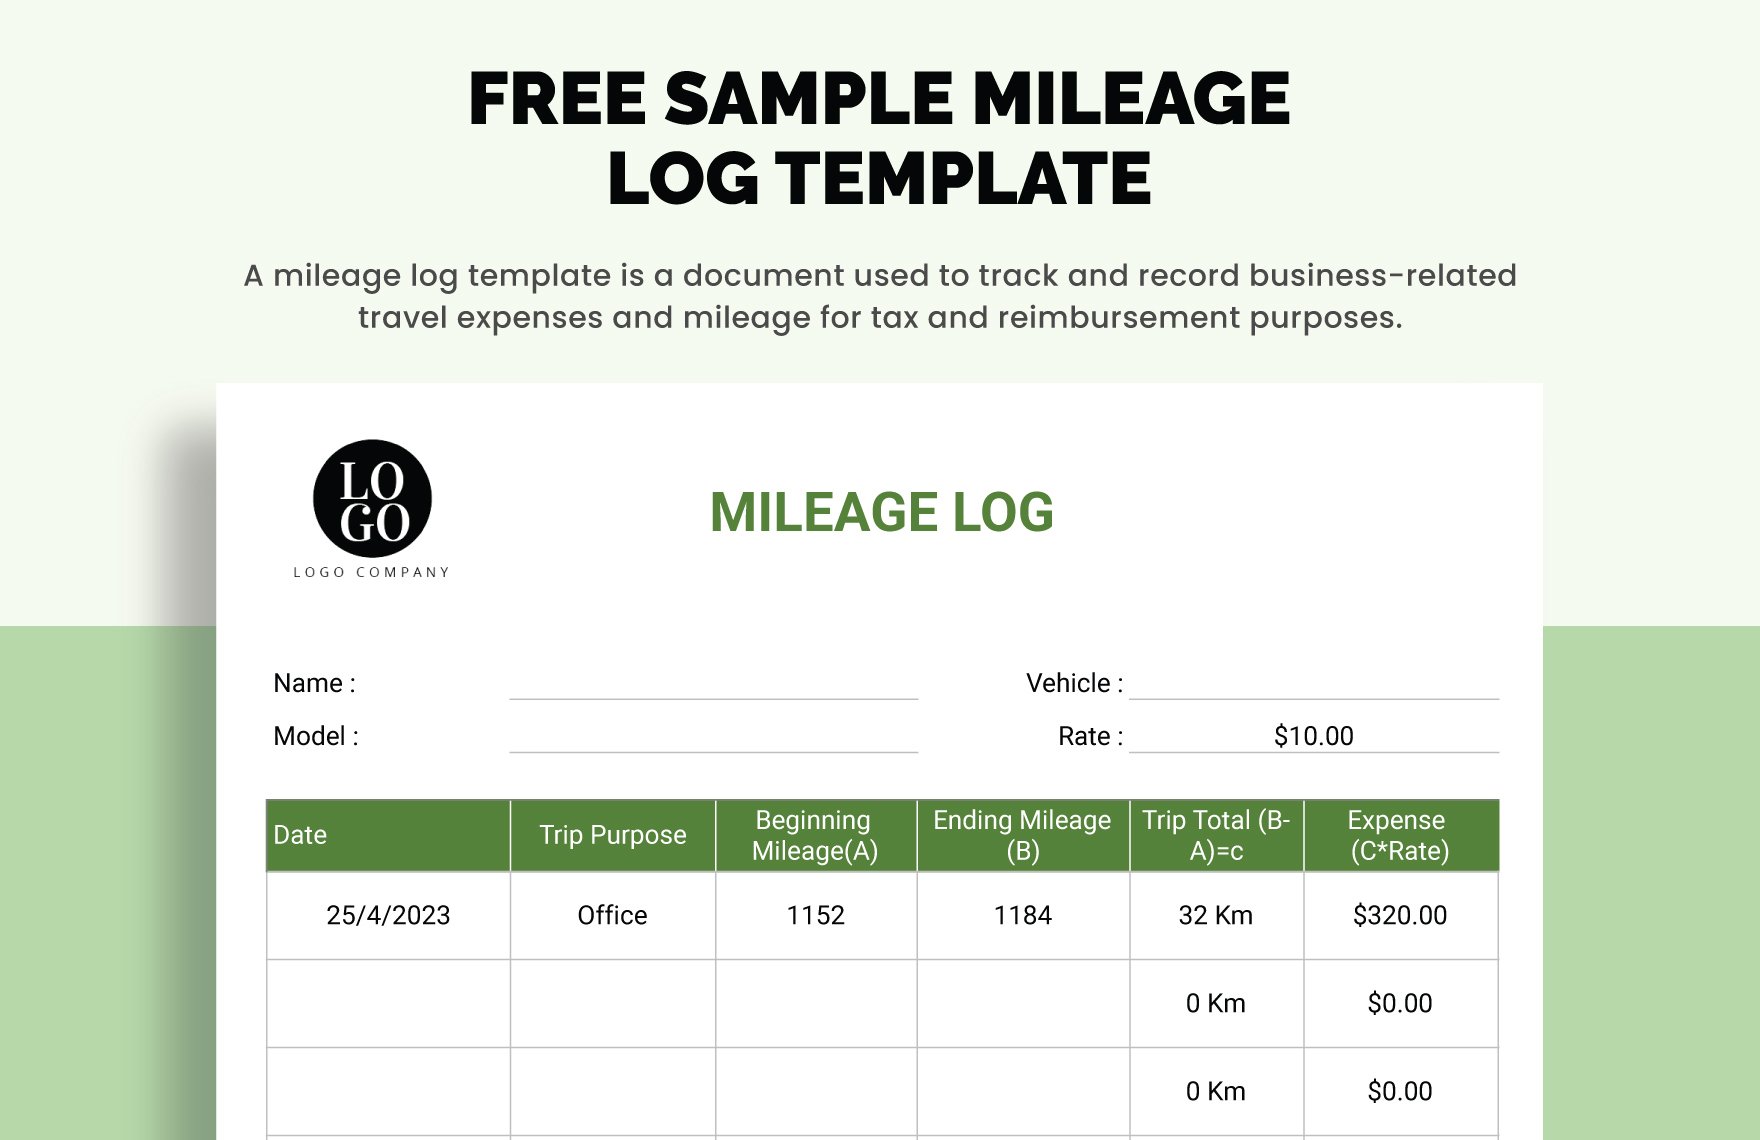 Sample Mileage Log Template